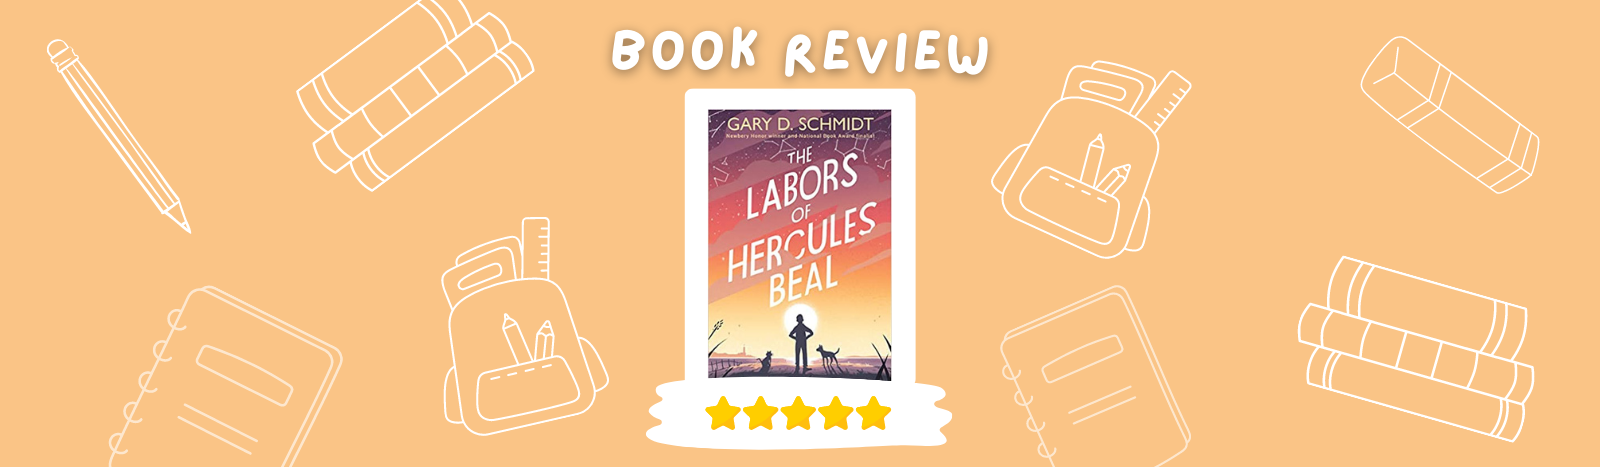 The Labors of Hercules Beal Book Review